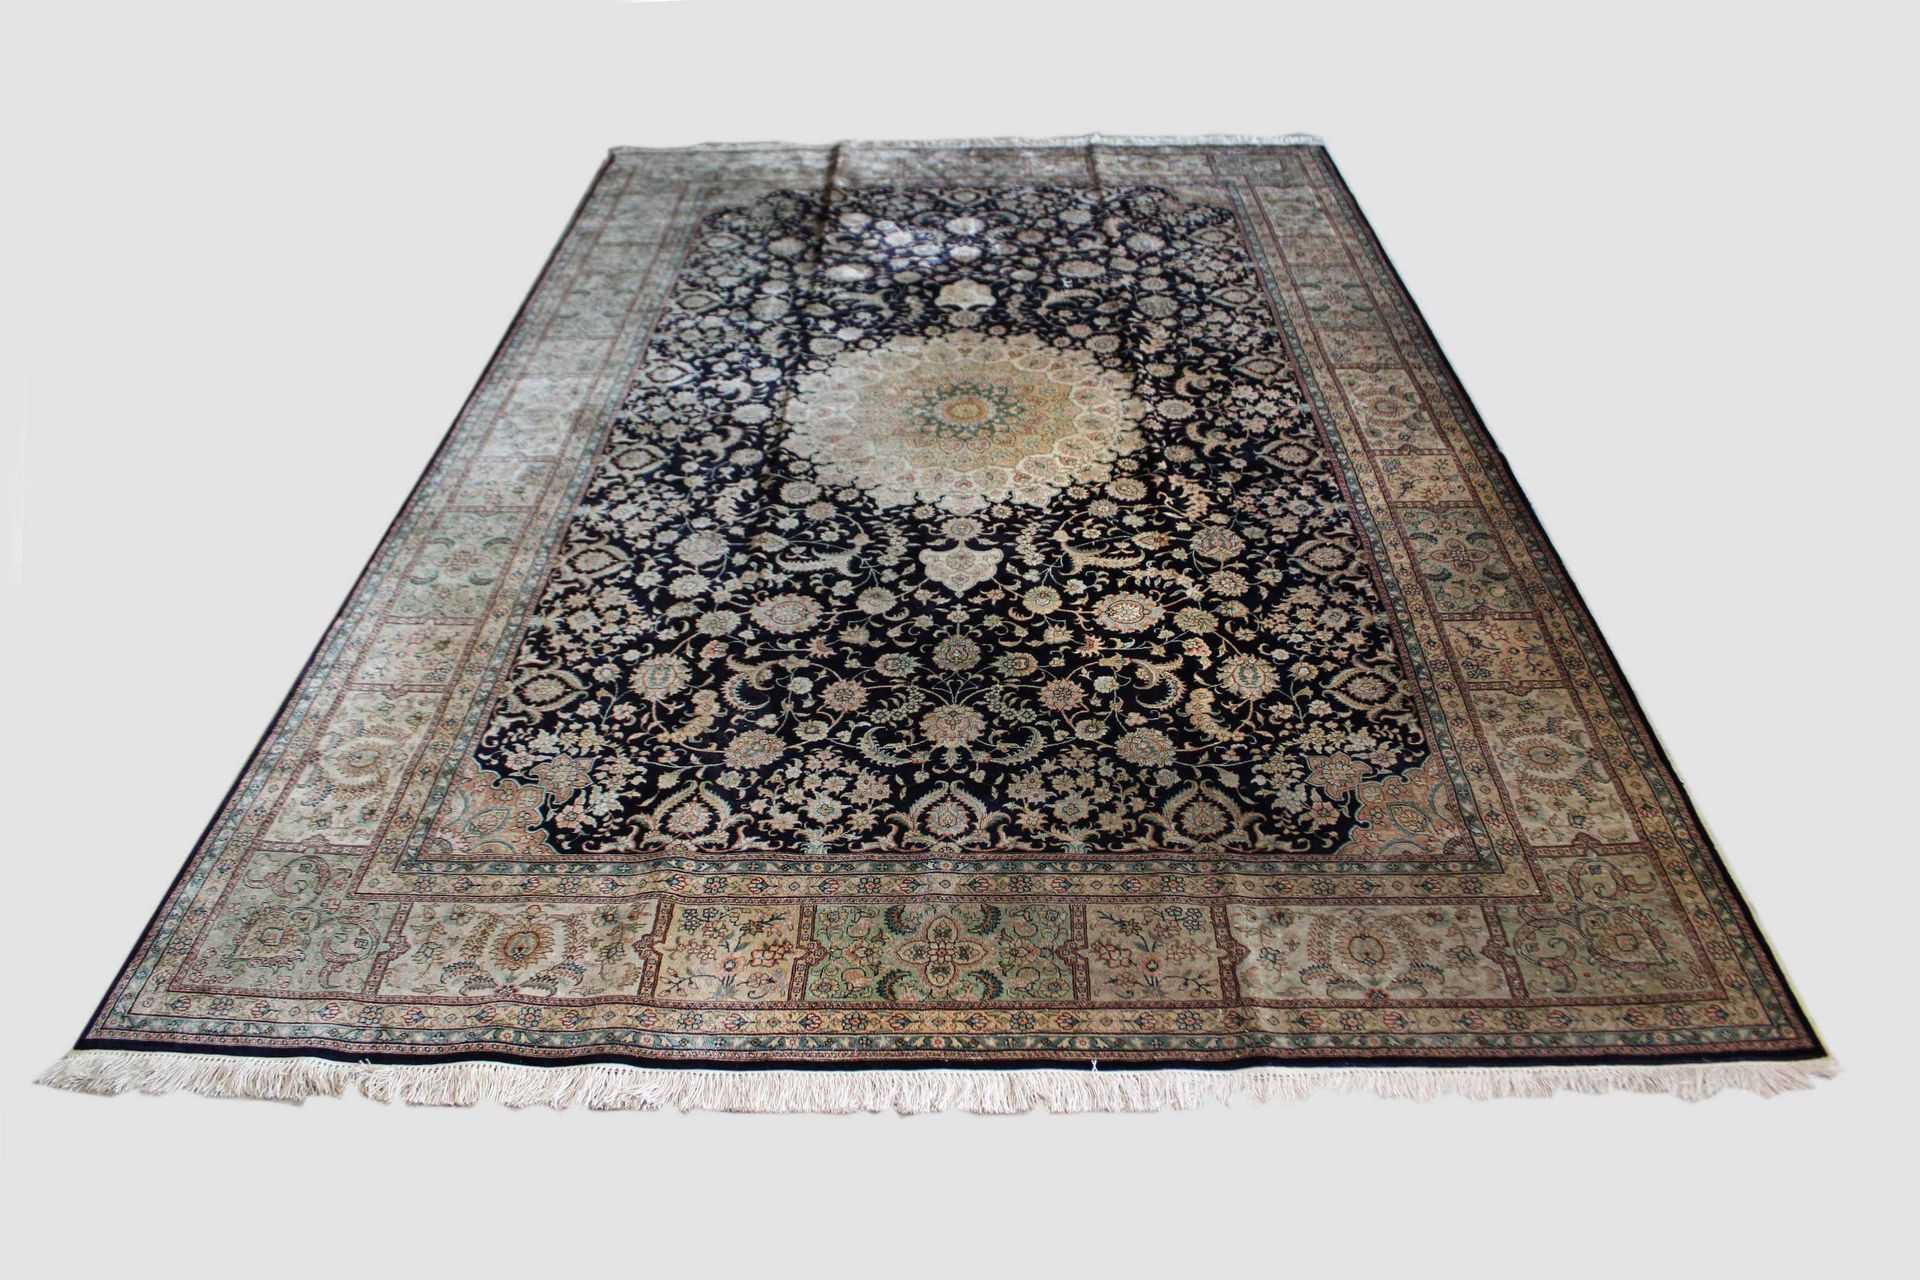 Teppich, China Tappeto, Cina, seta. Dimensioni: 185 x 283 cm.